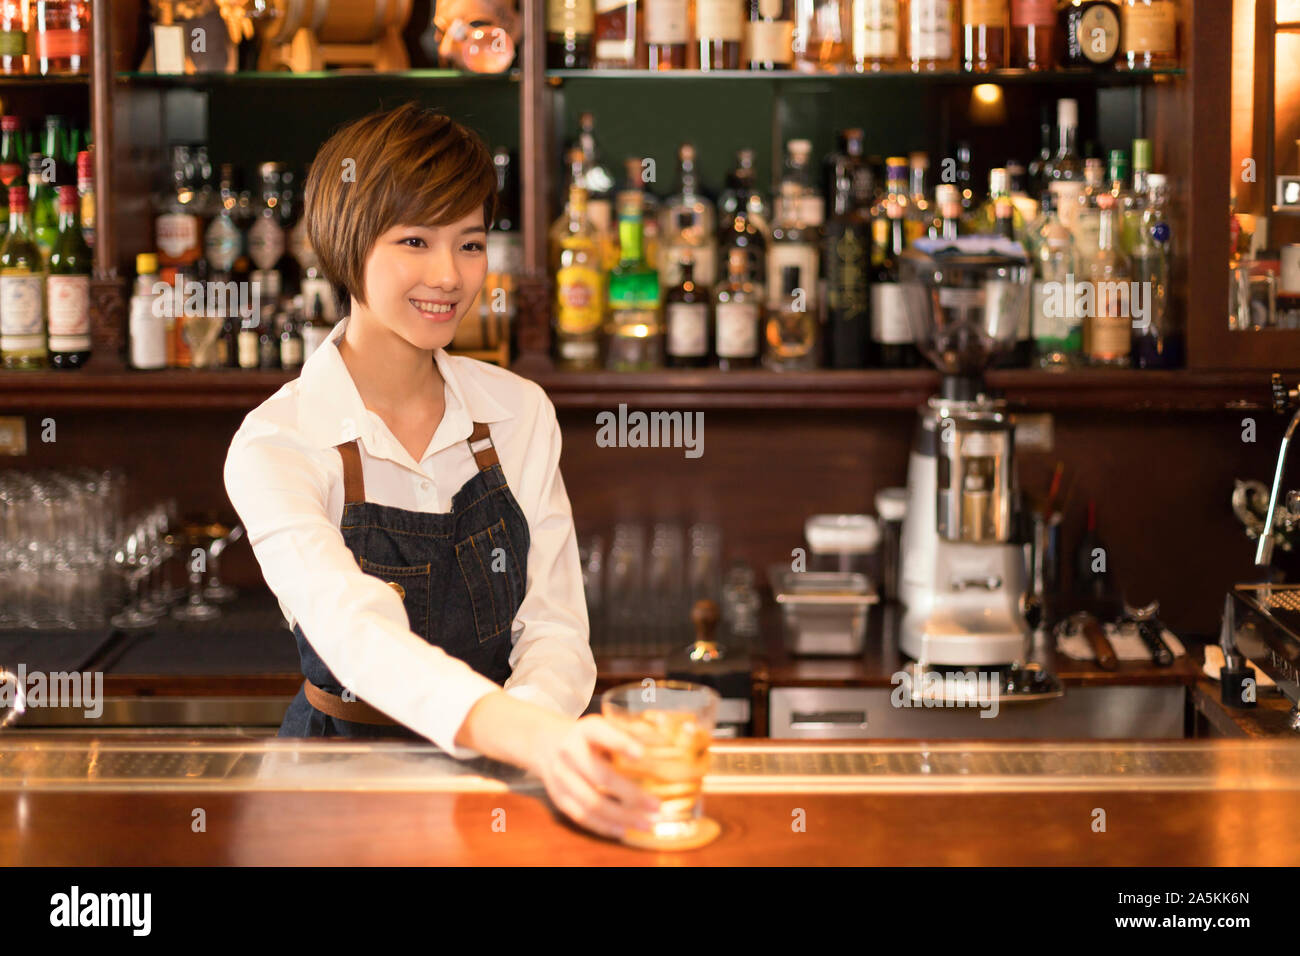 Female bartender serving drink at bar Stock Photo